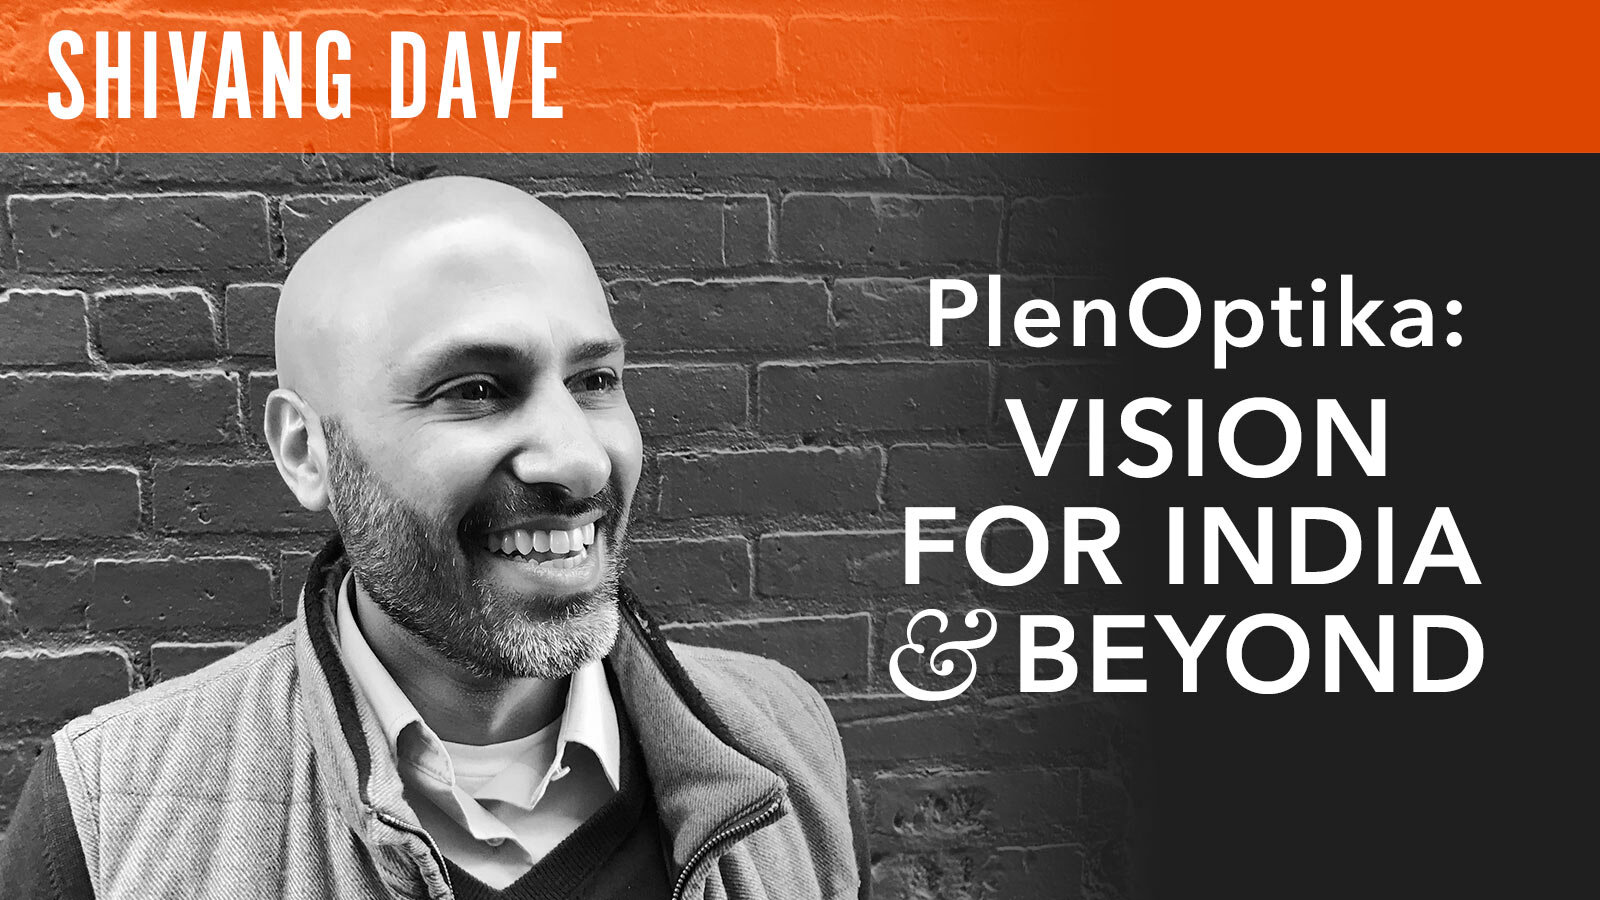 Shivang Dave, "PlenOptika: Vision for India & Beyond"